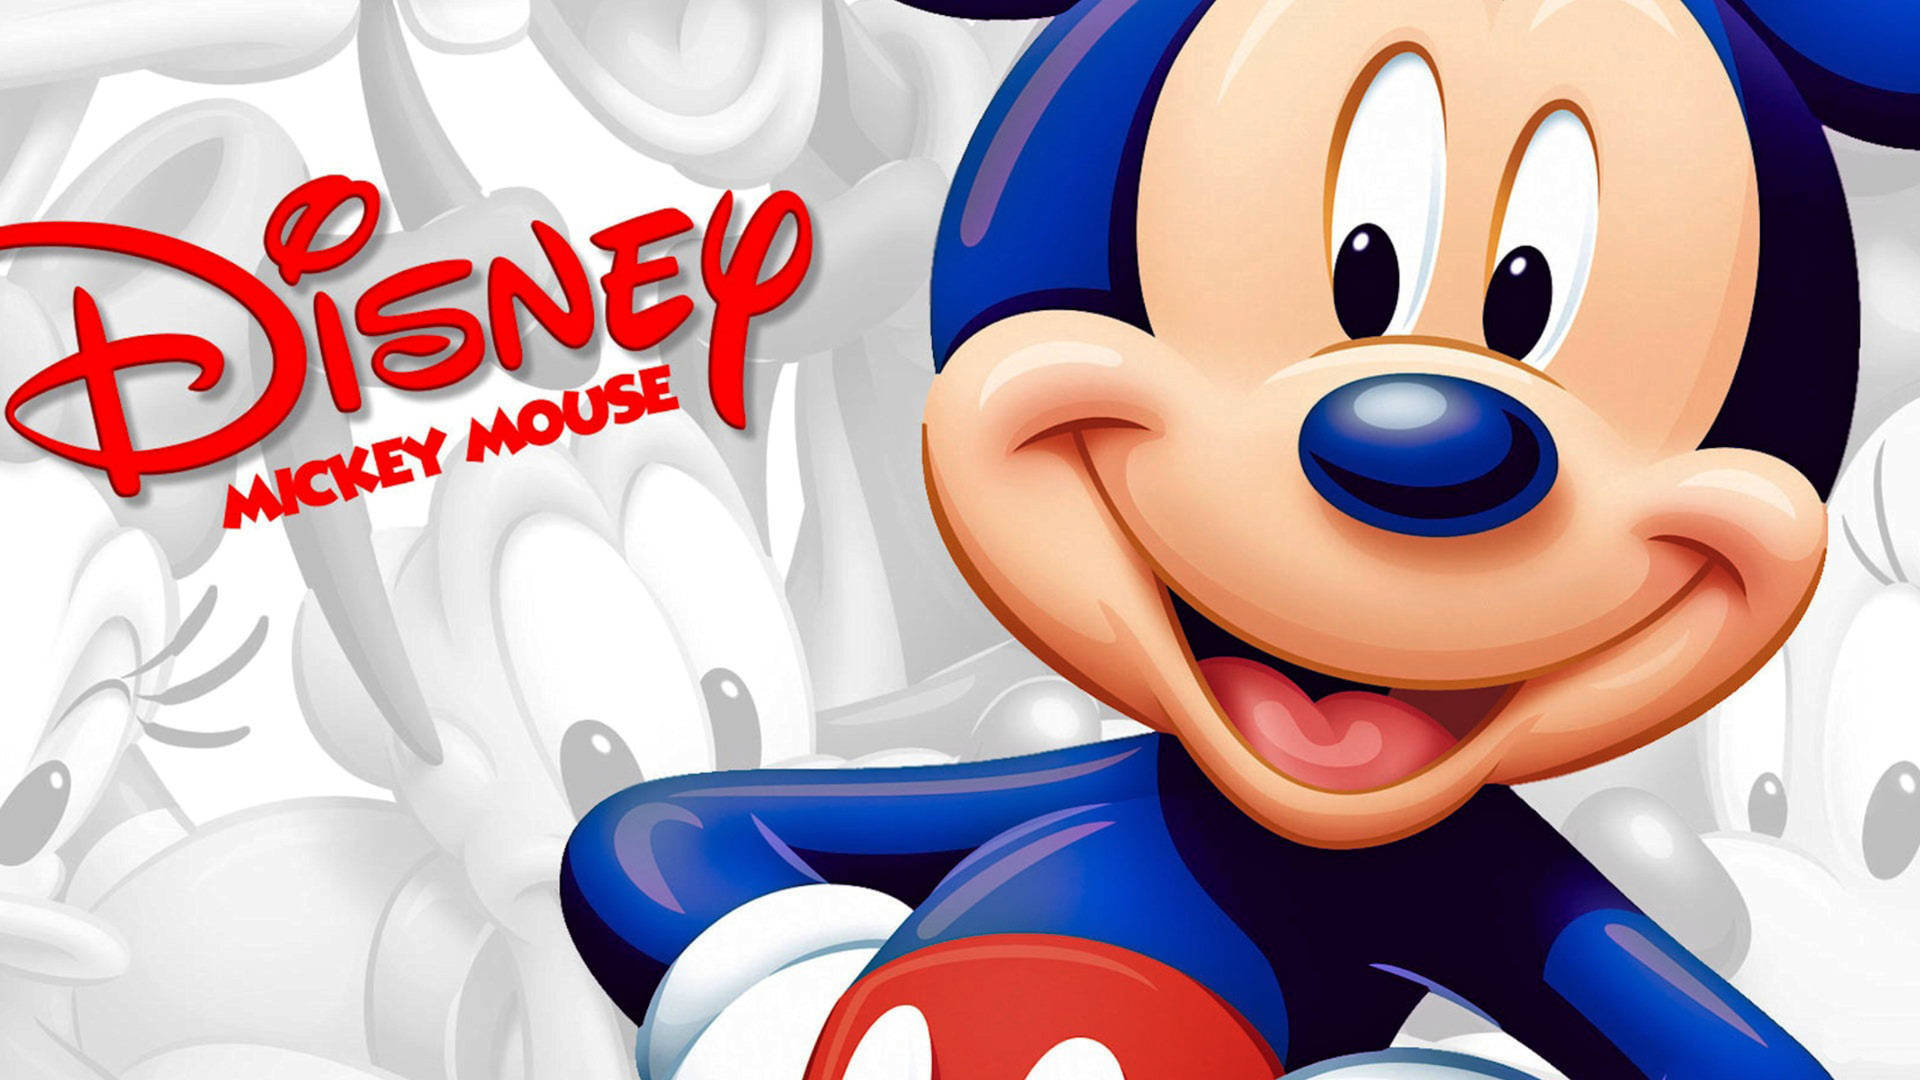 2560x1440 Disney Mickey Mouse Mascot Background